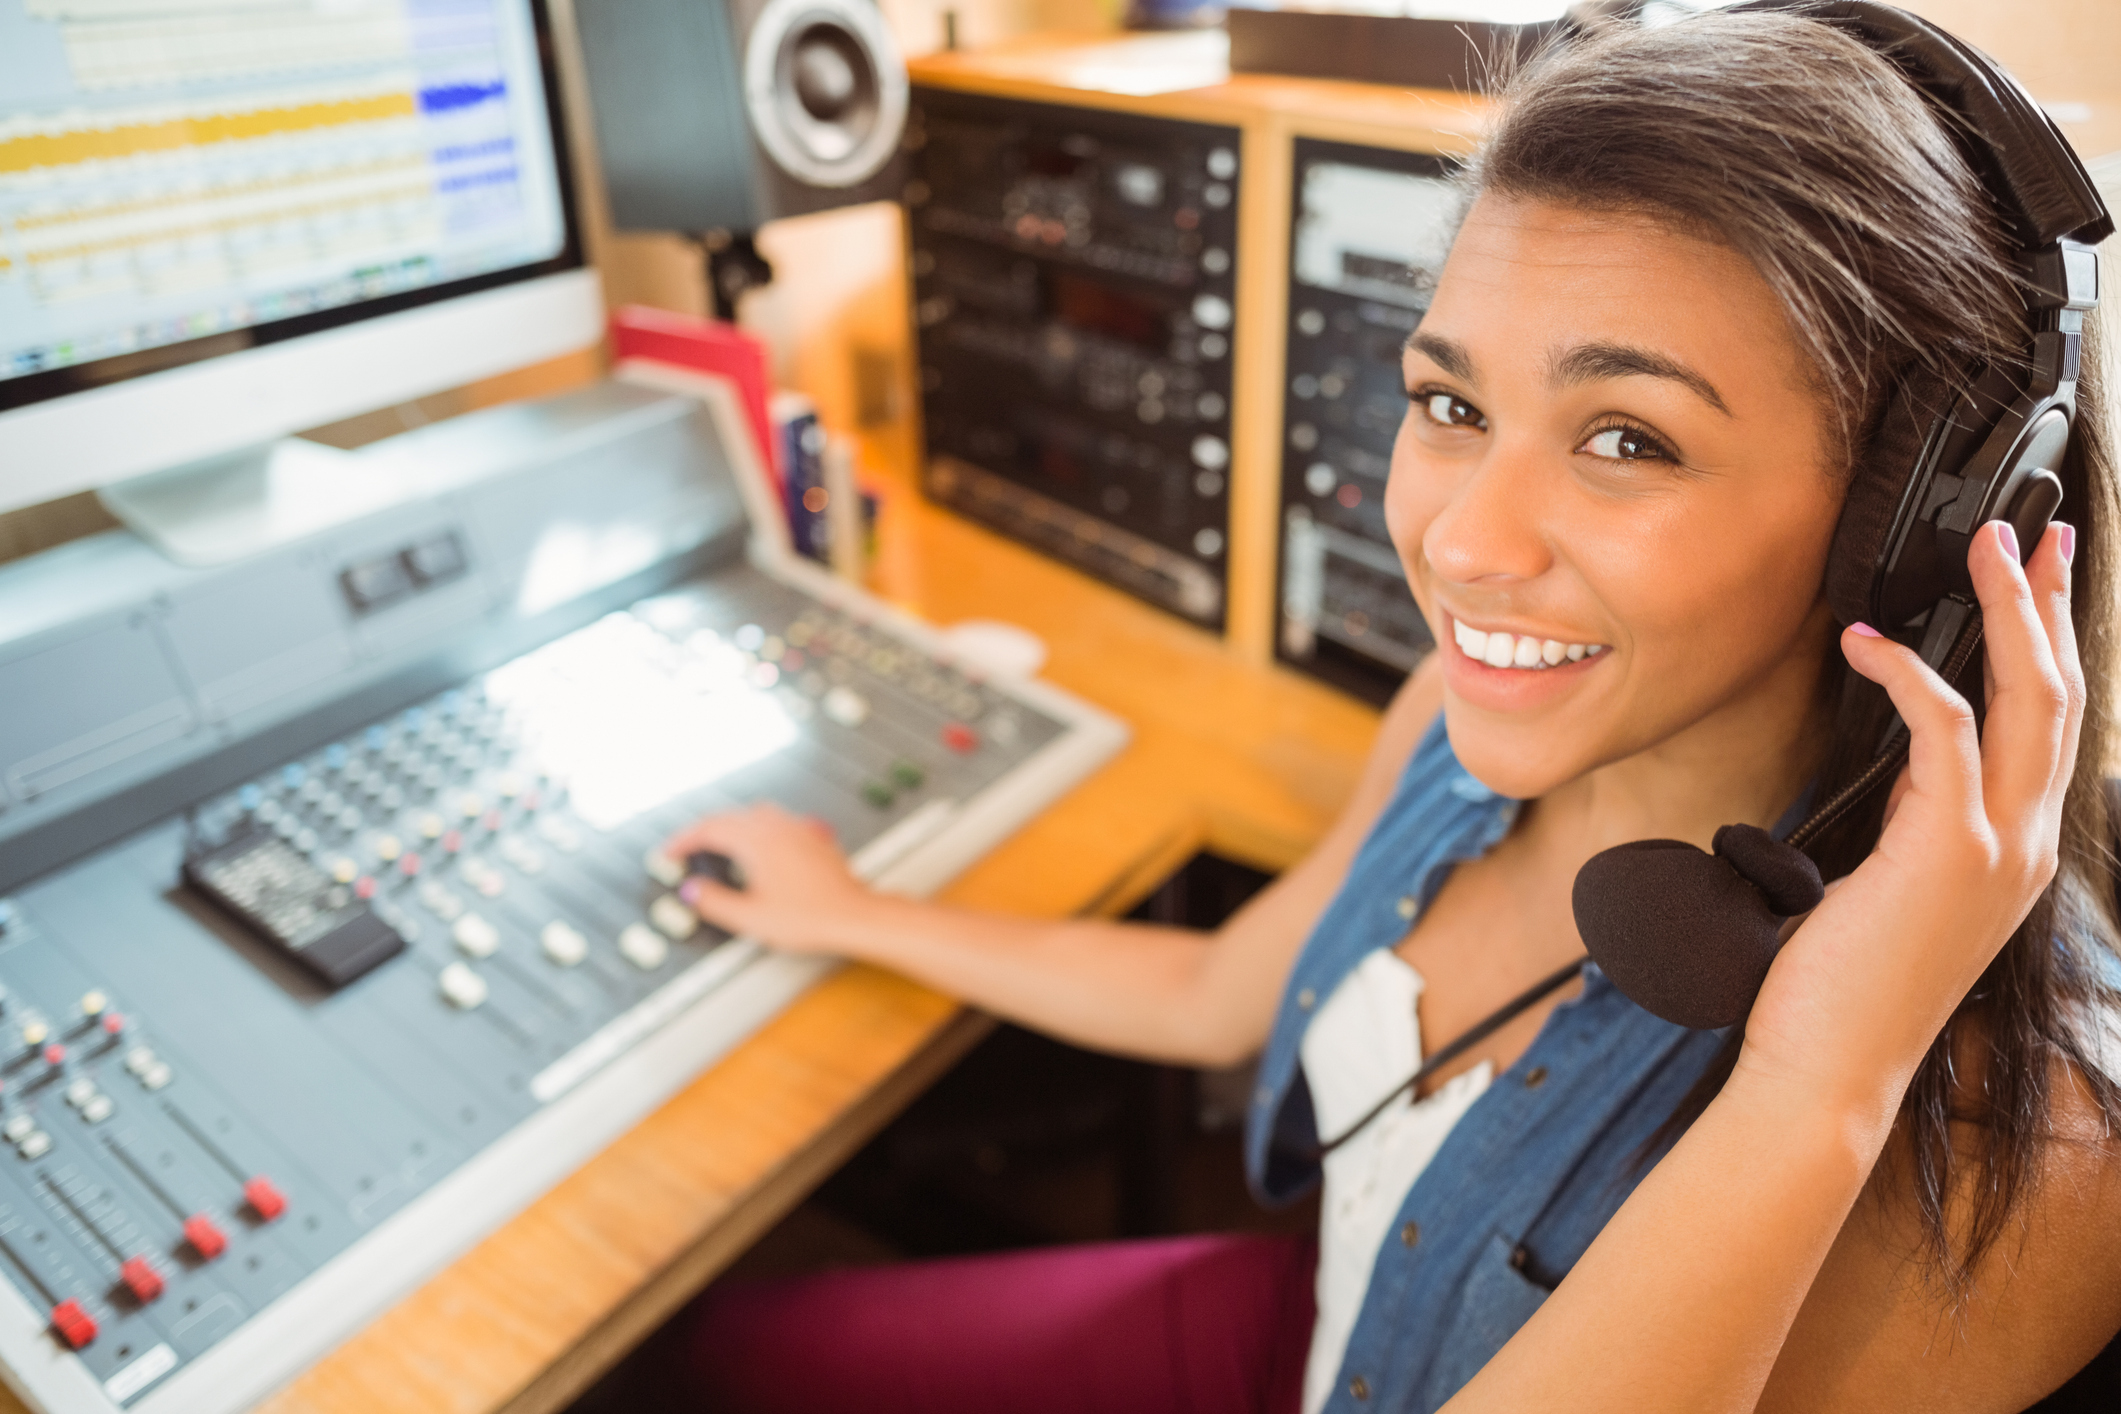 Smiling university student mixing audio